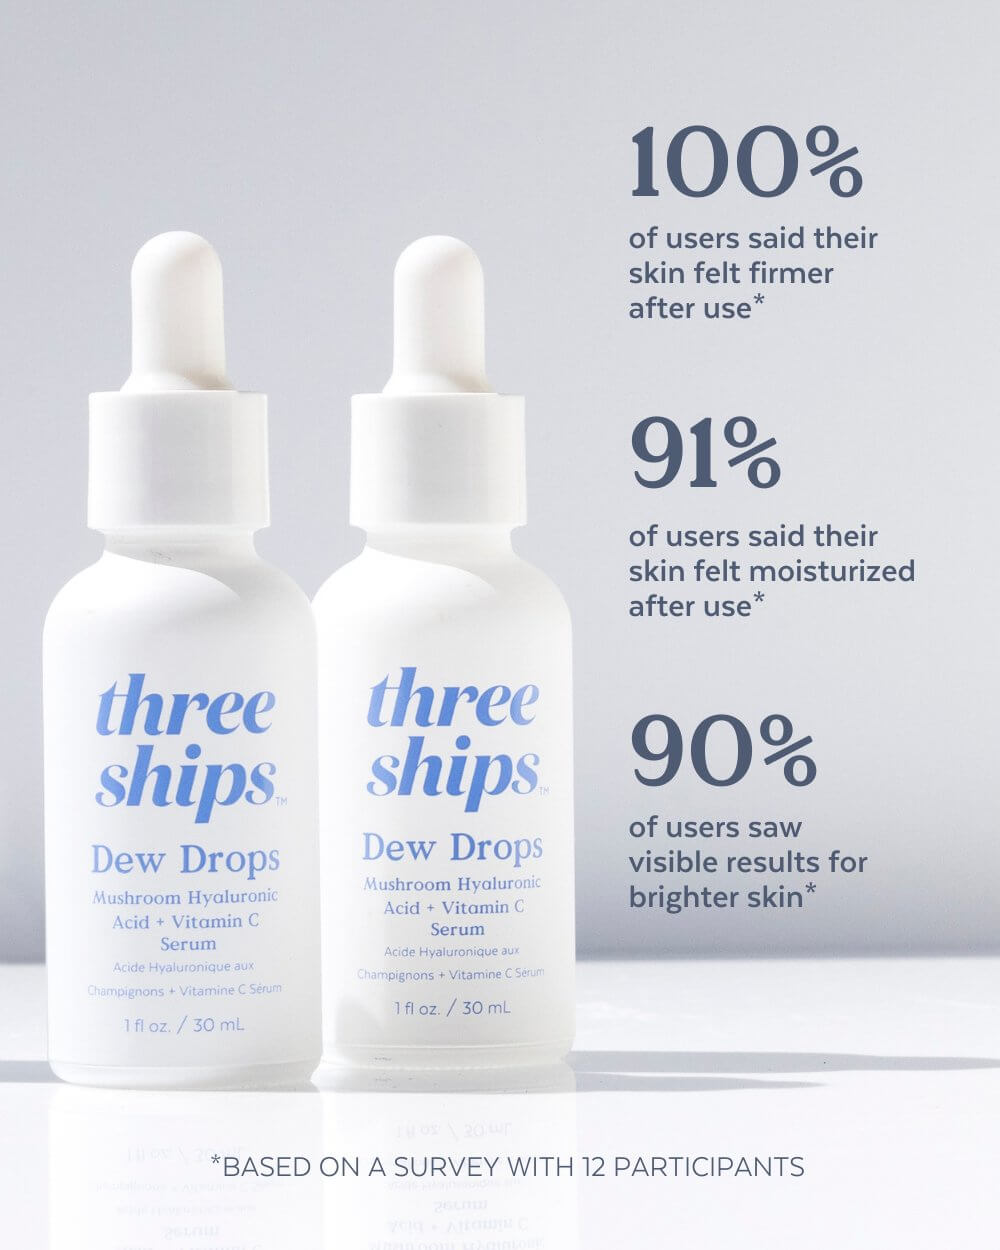 Dew Drops Mushroom Hyaluronic Acid + Vitamin C Serum Three Ships SERUMS Natural Vegan Cruelty-free Skincare